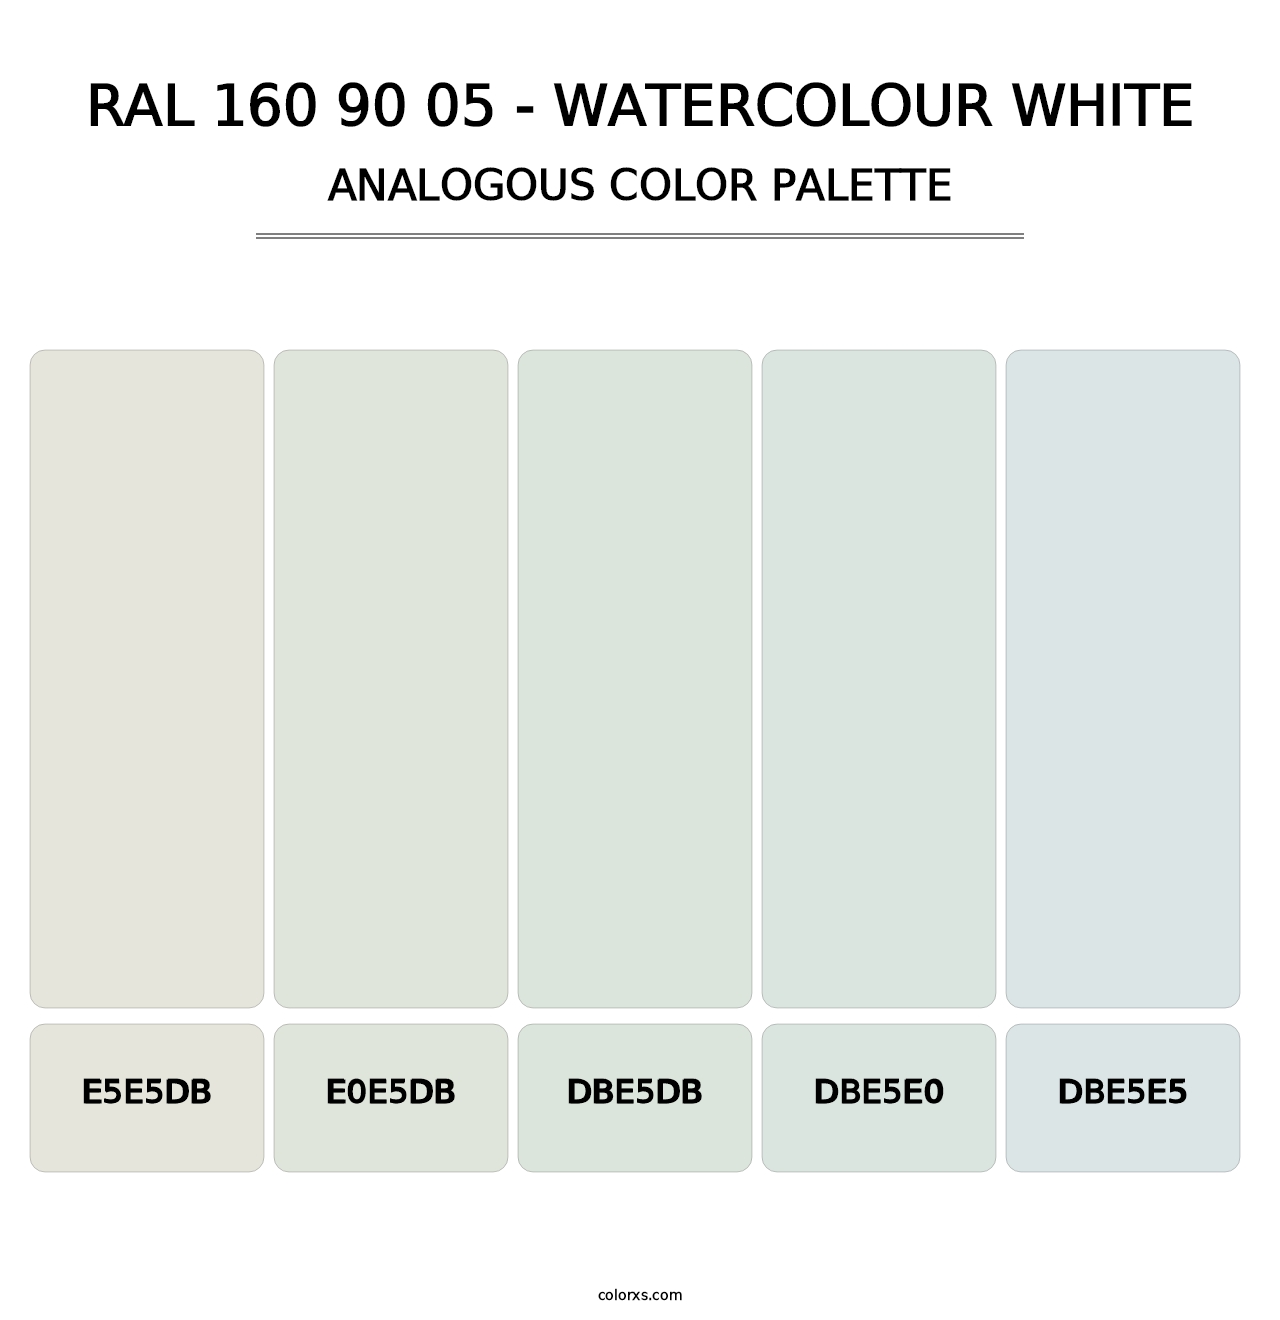 RAL 160 90 05 - Watercolour White - Analogous Color Palette